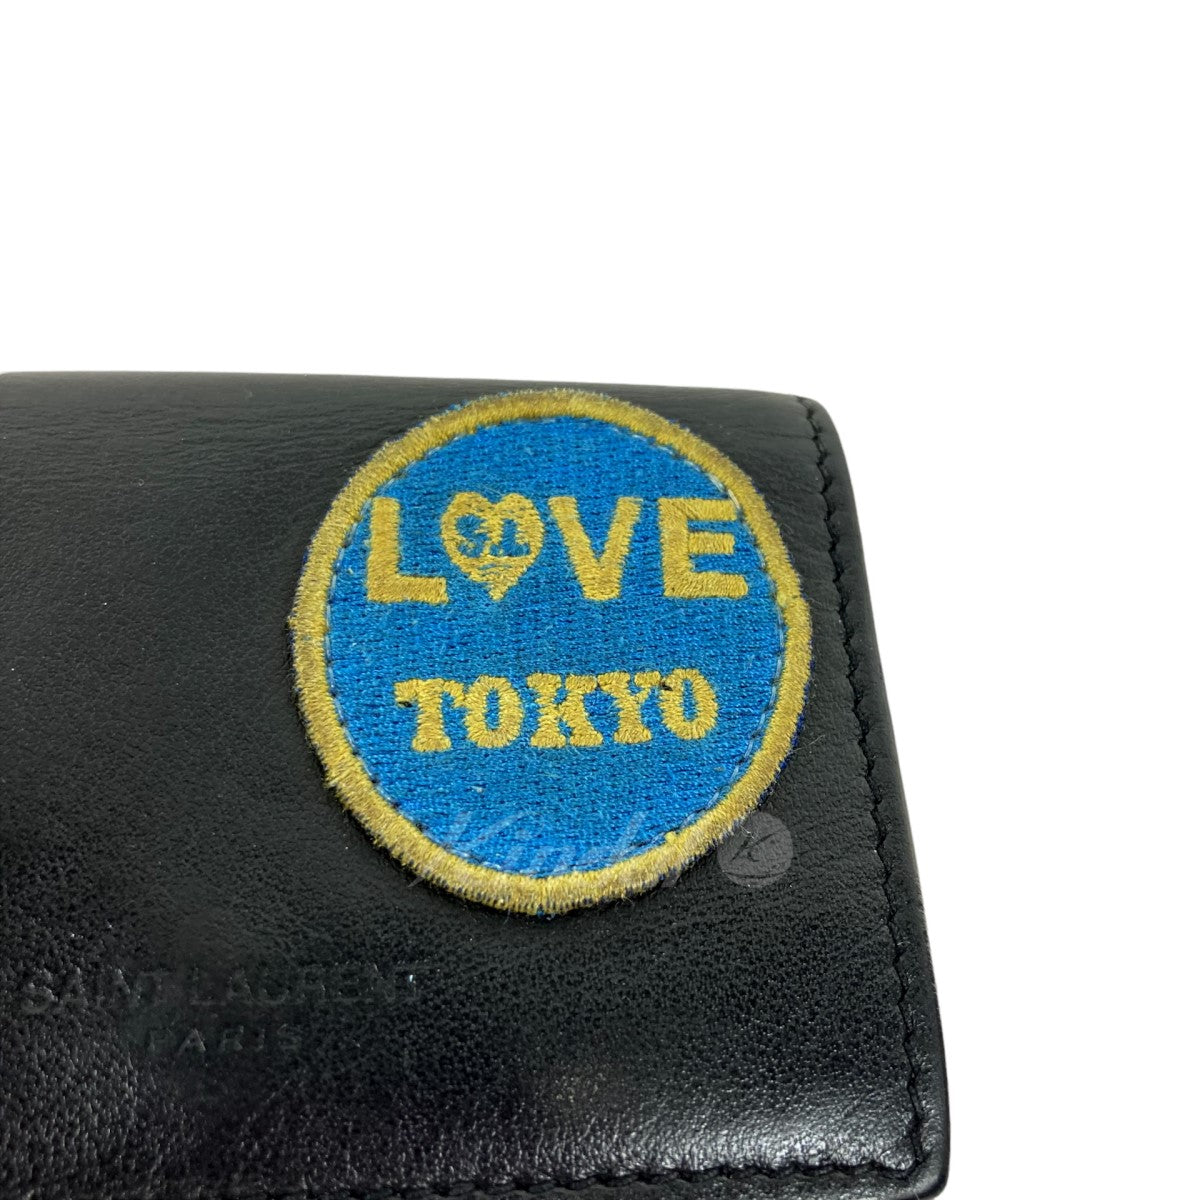 SAINT LAURENT PARIS(サンローランパリ) LOVE TOKYO tiny wallet GINZA SIX LIMITED  ITEMS 財布